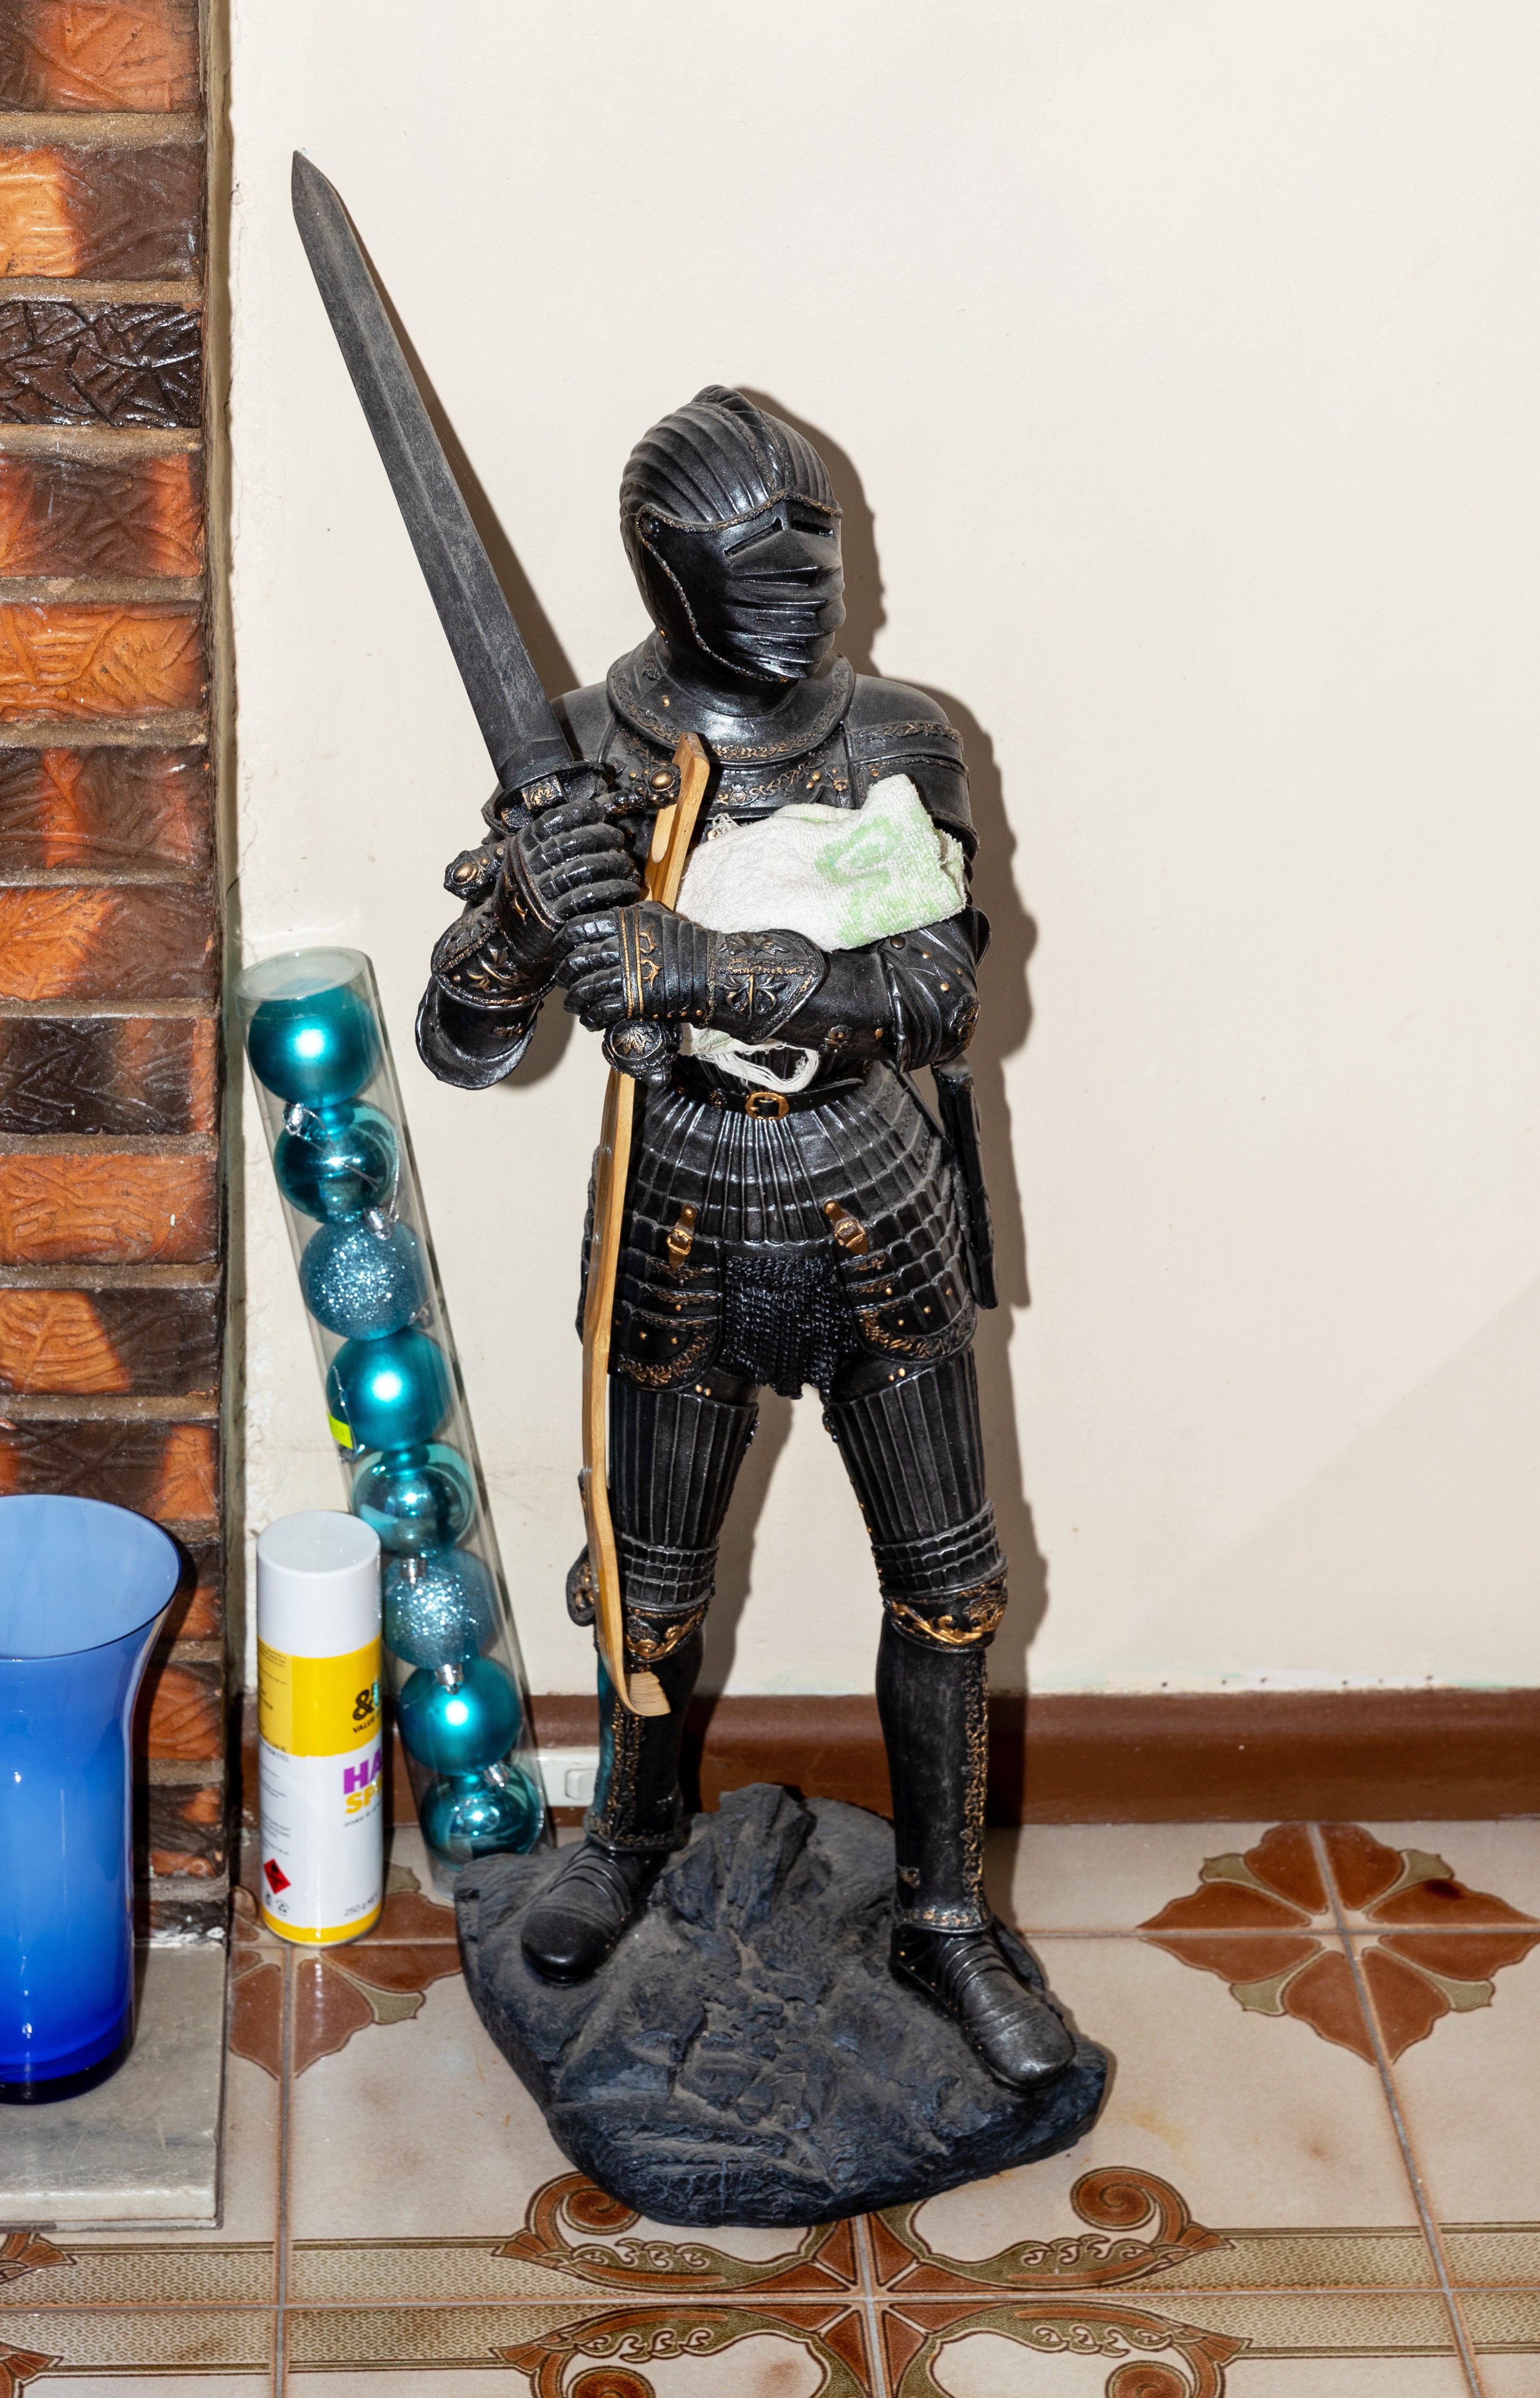 Knight Swordsman Statue